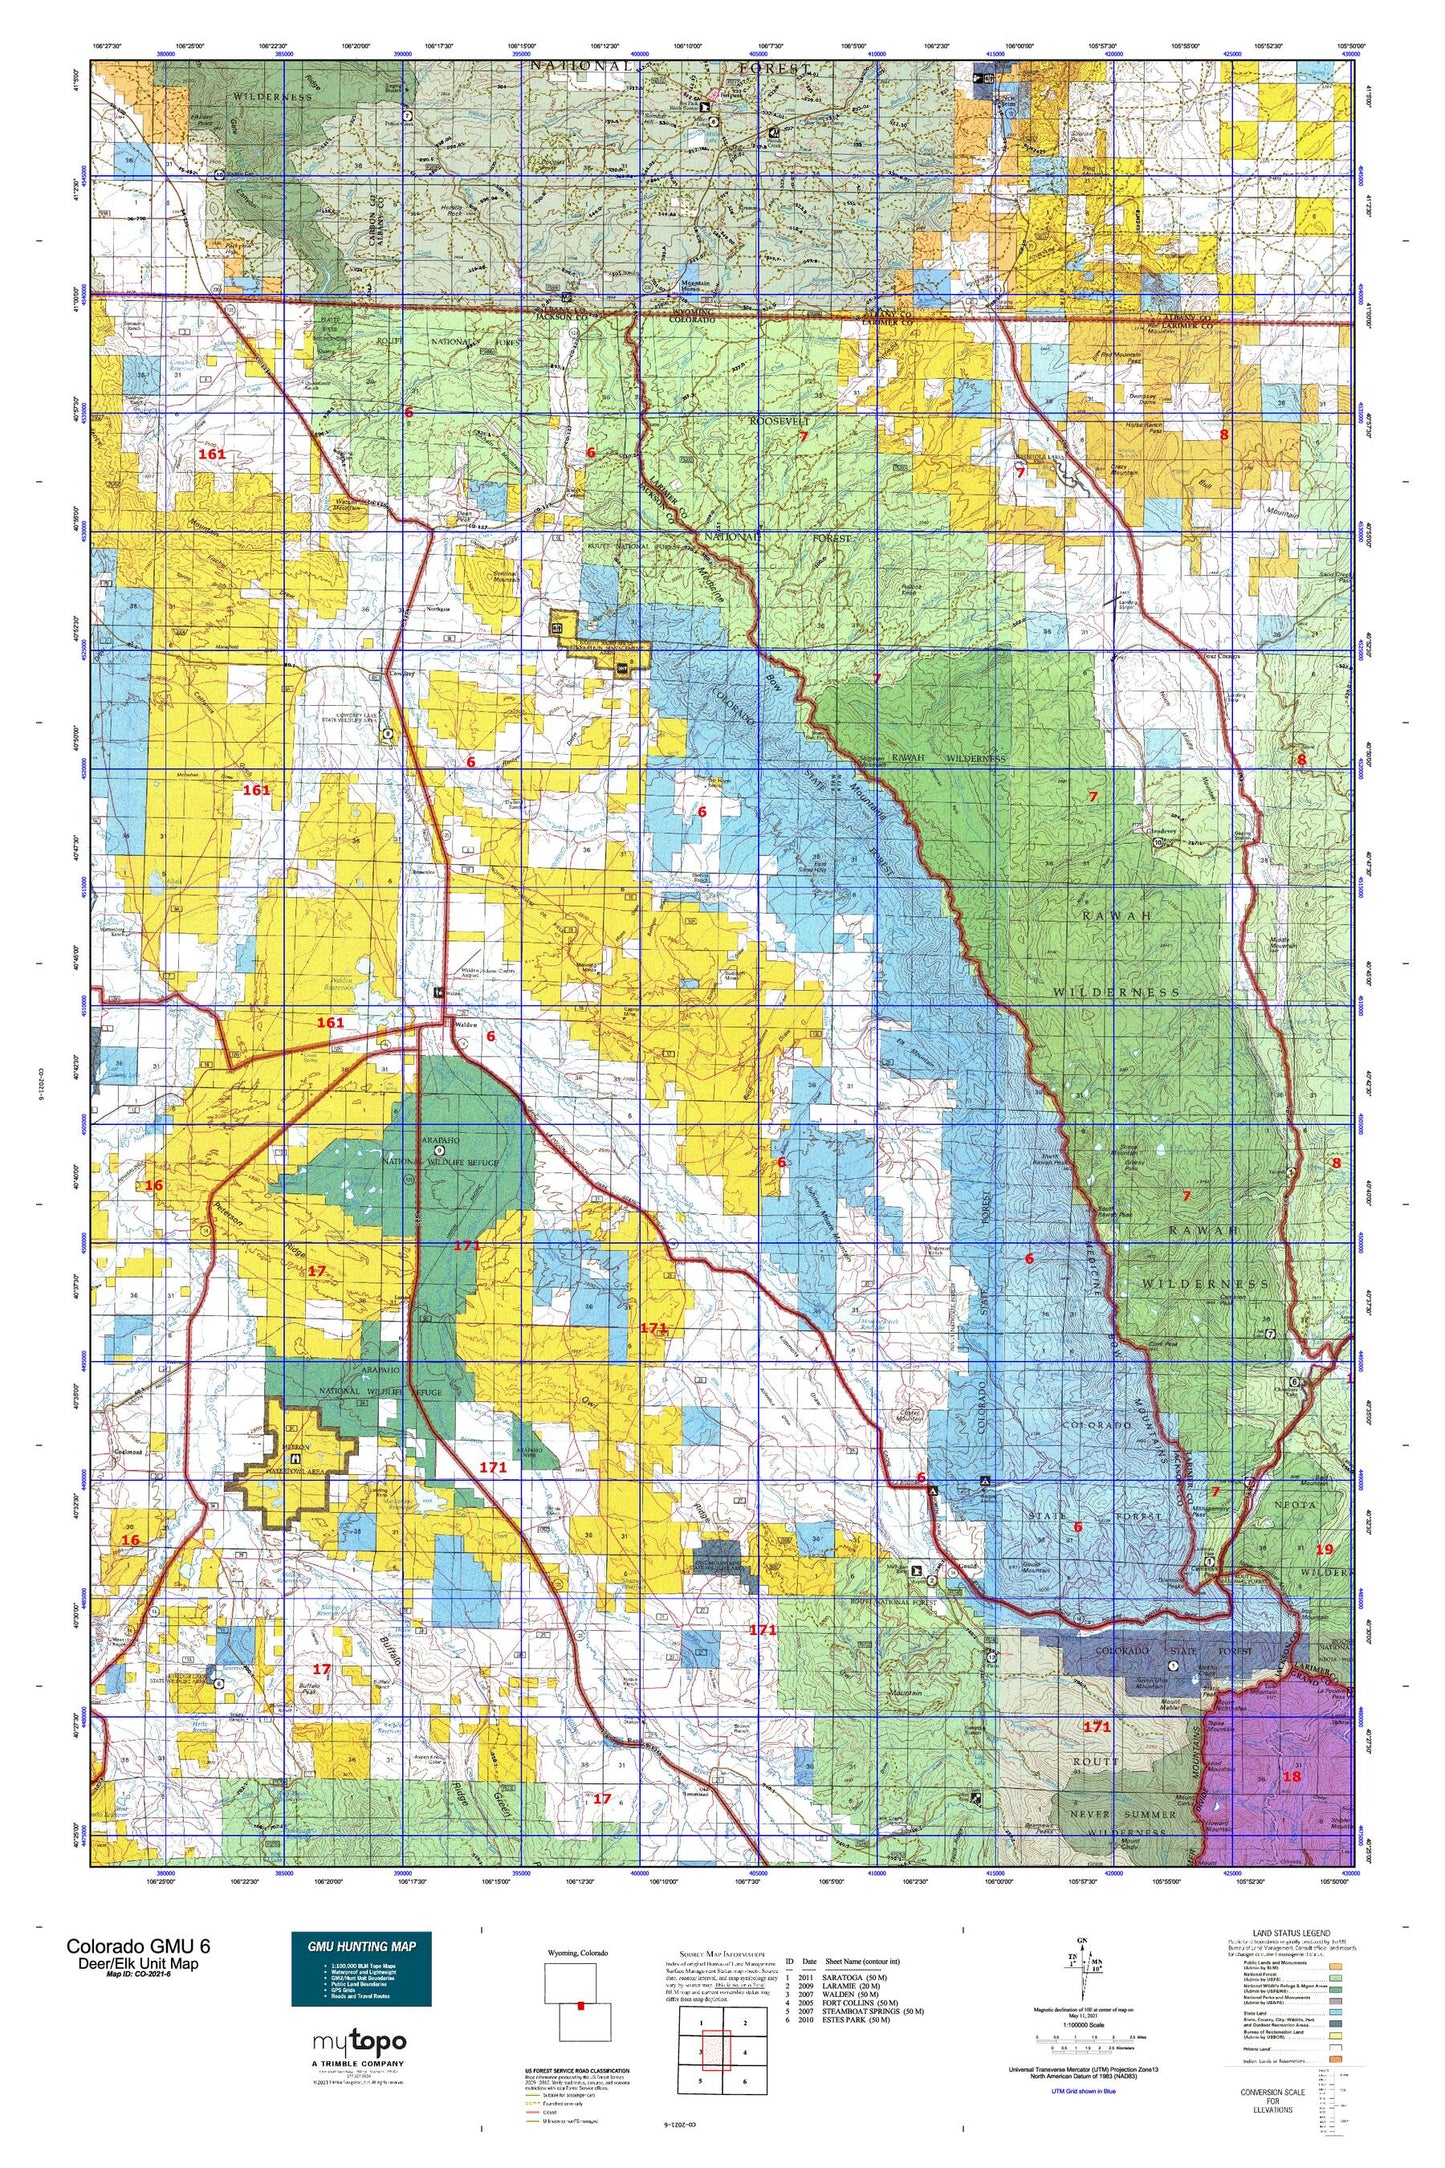 Colorado GMU 6 Map Image